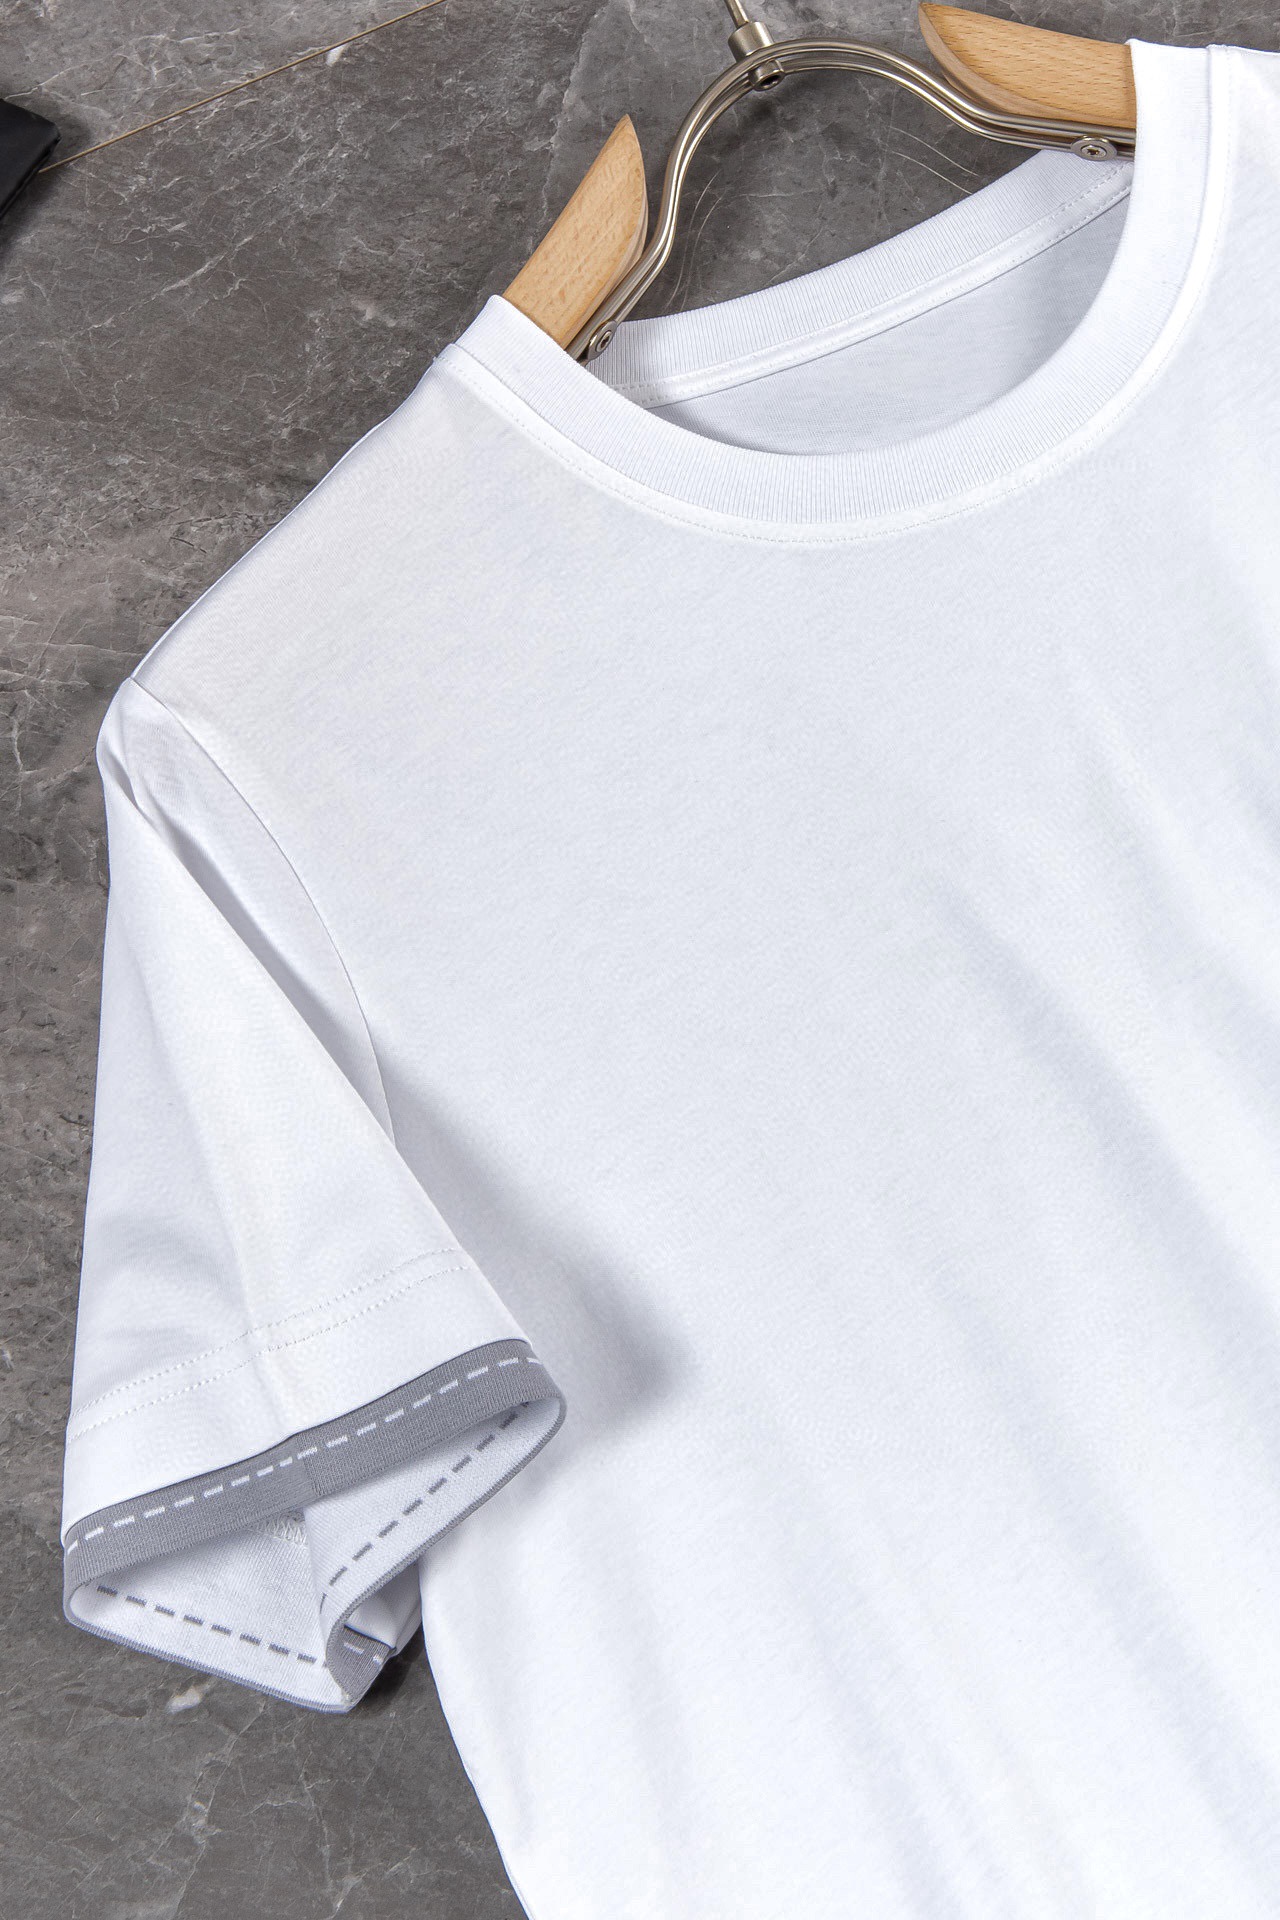 New#爱马仕*HERM*S*整体的设计颇具时尚感圆领短袖T恤设计采用袖子边缘嵌入撞色棉质螺纹装饰叠穿的